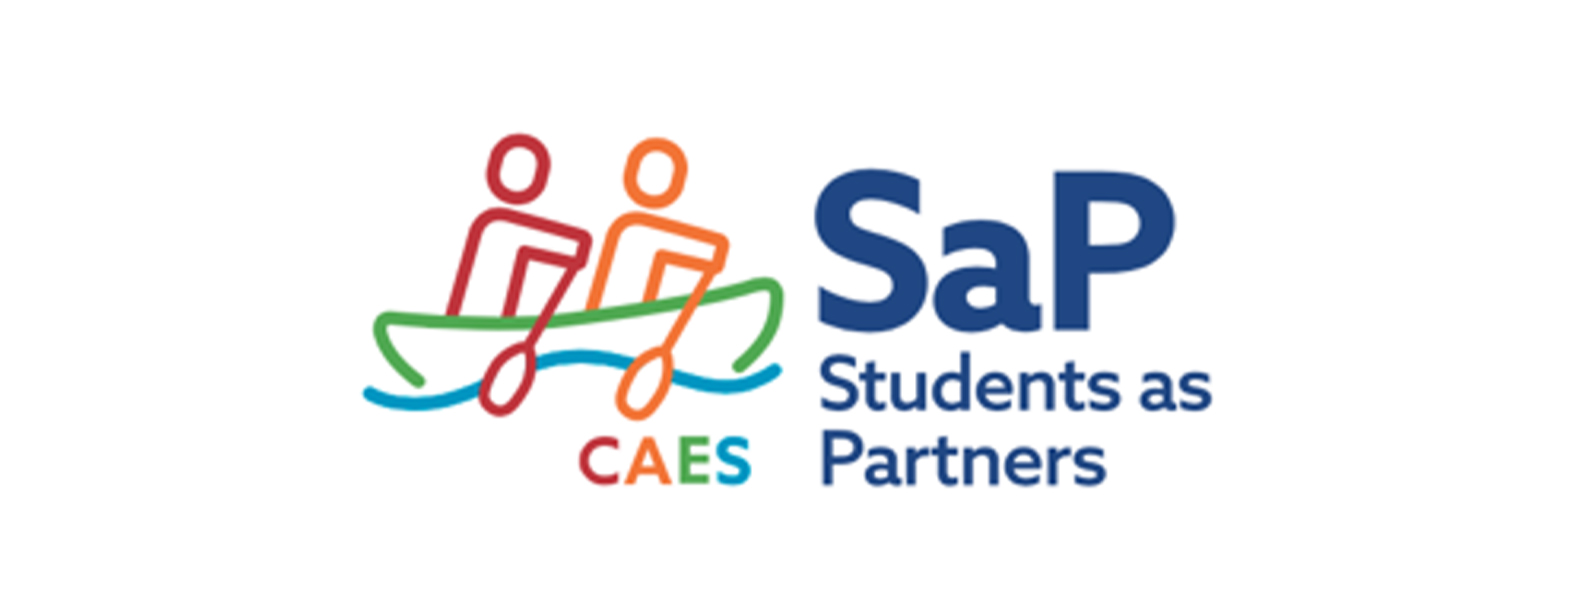 Logo of CAES Student Partnership Initiative